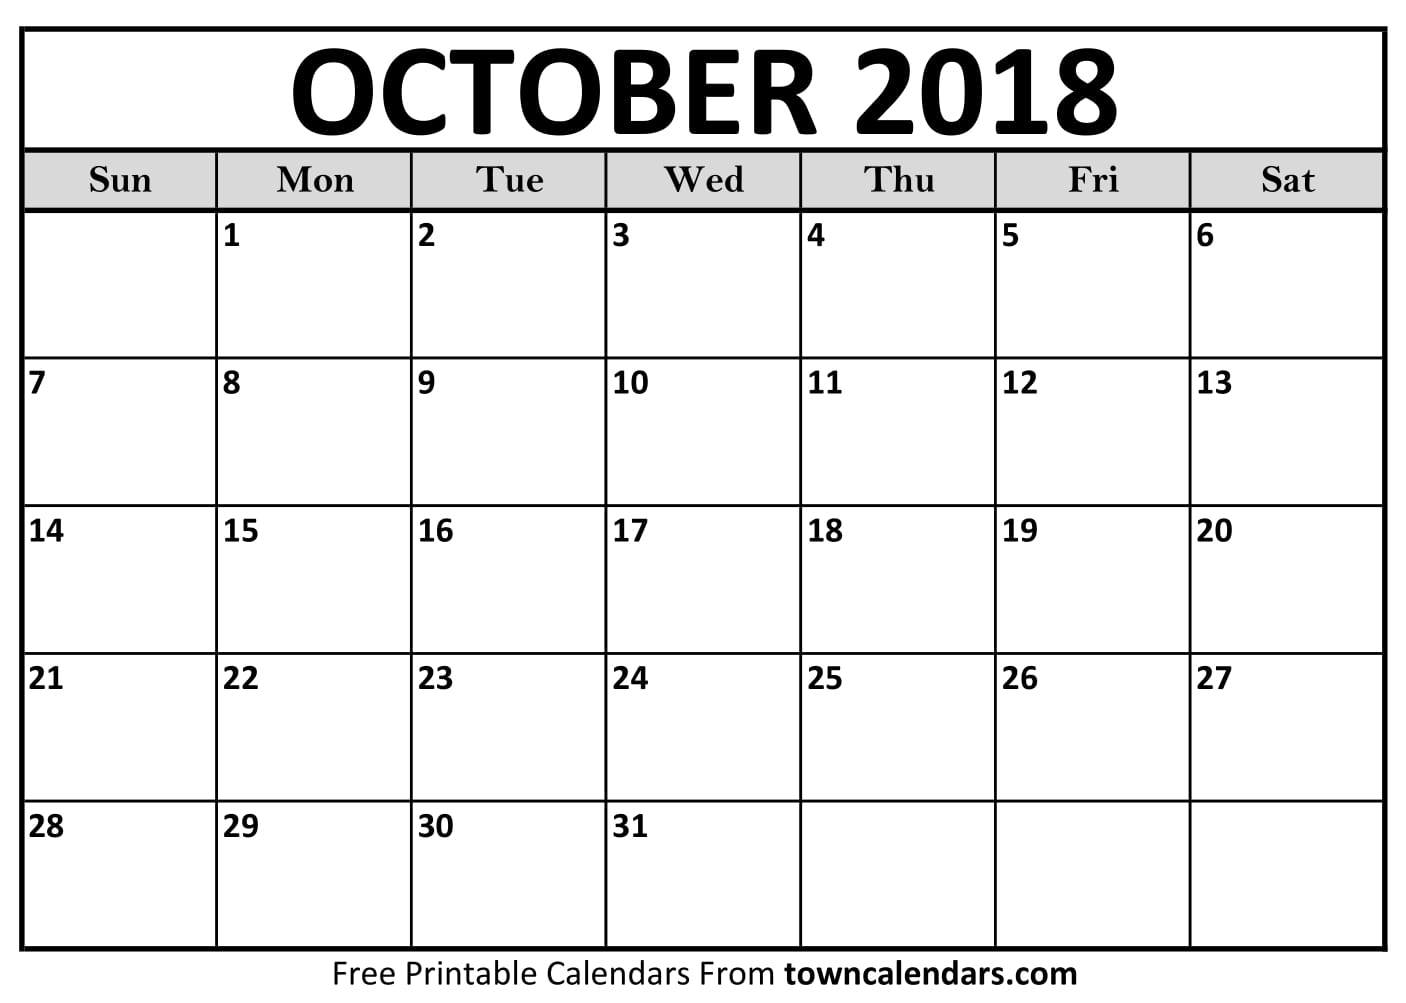 Calendar Of October 2018